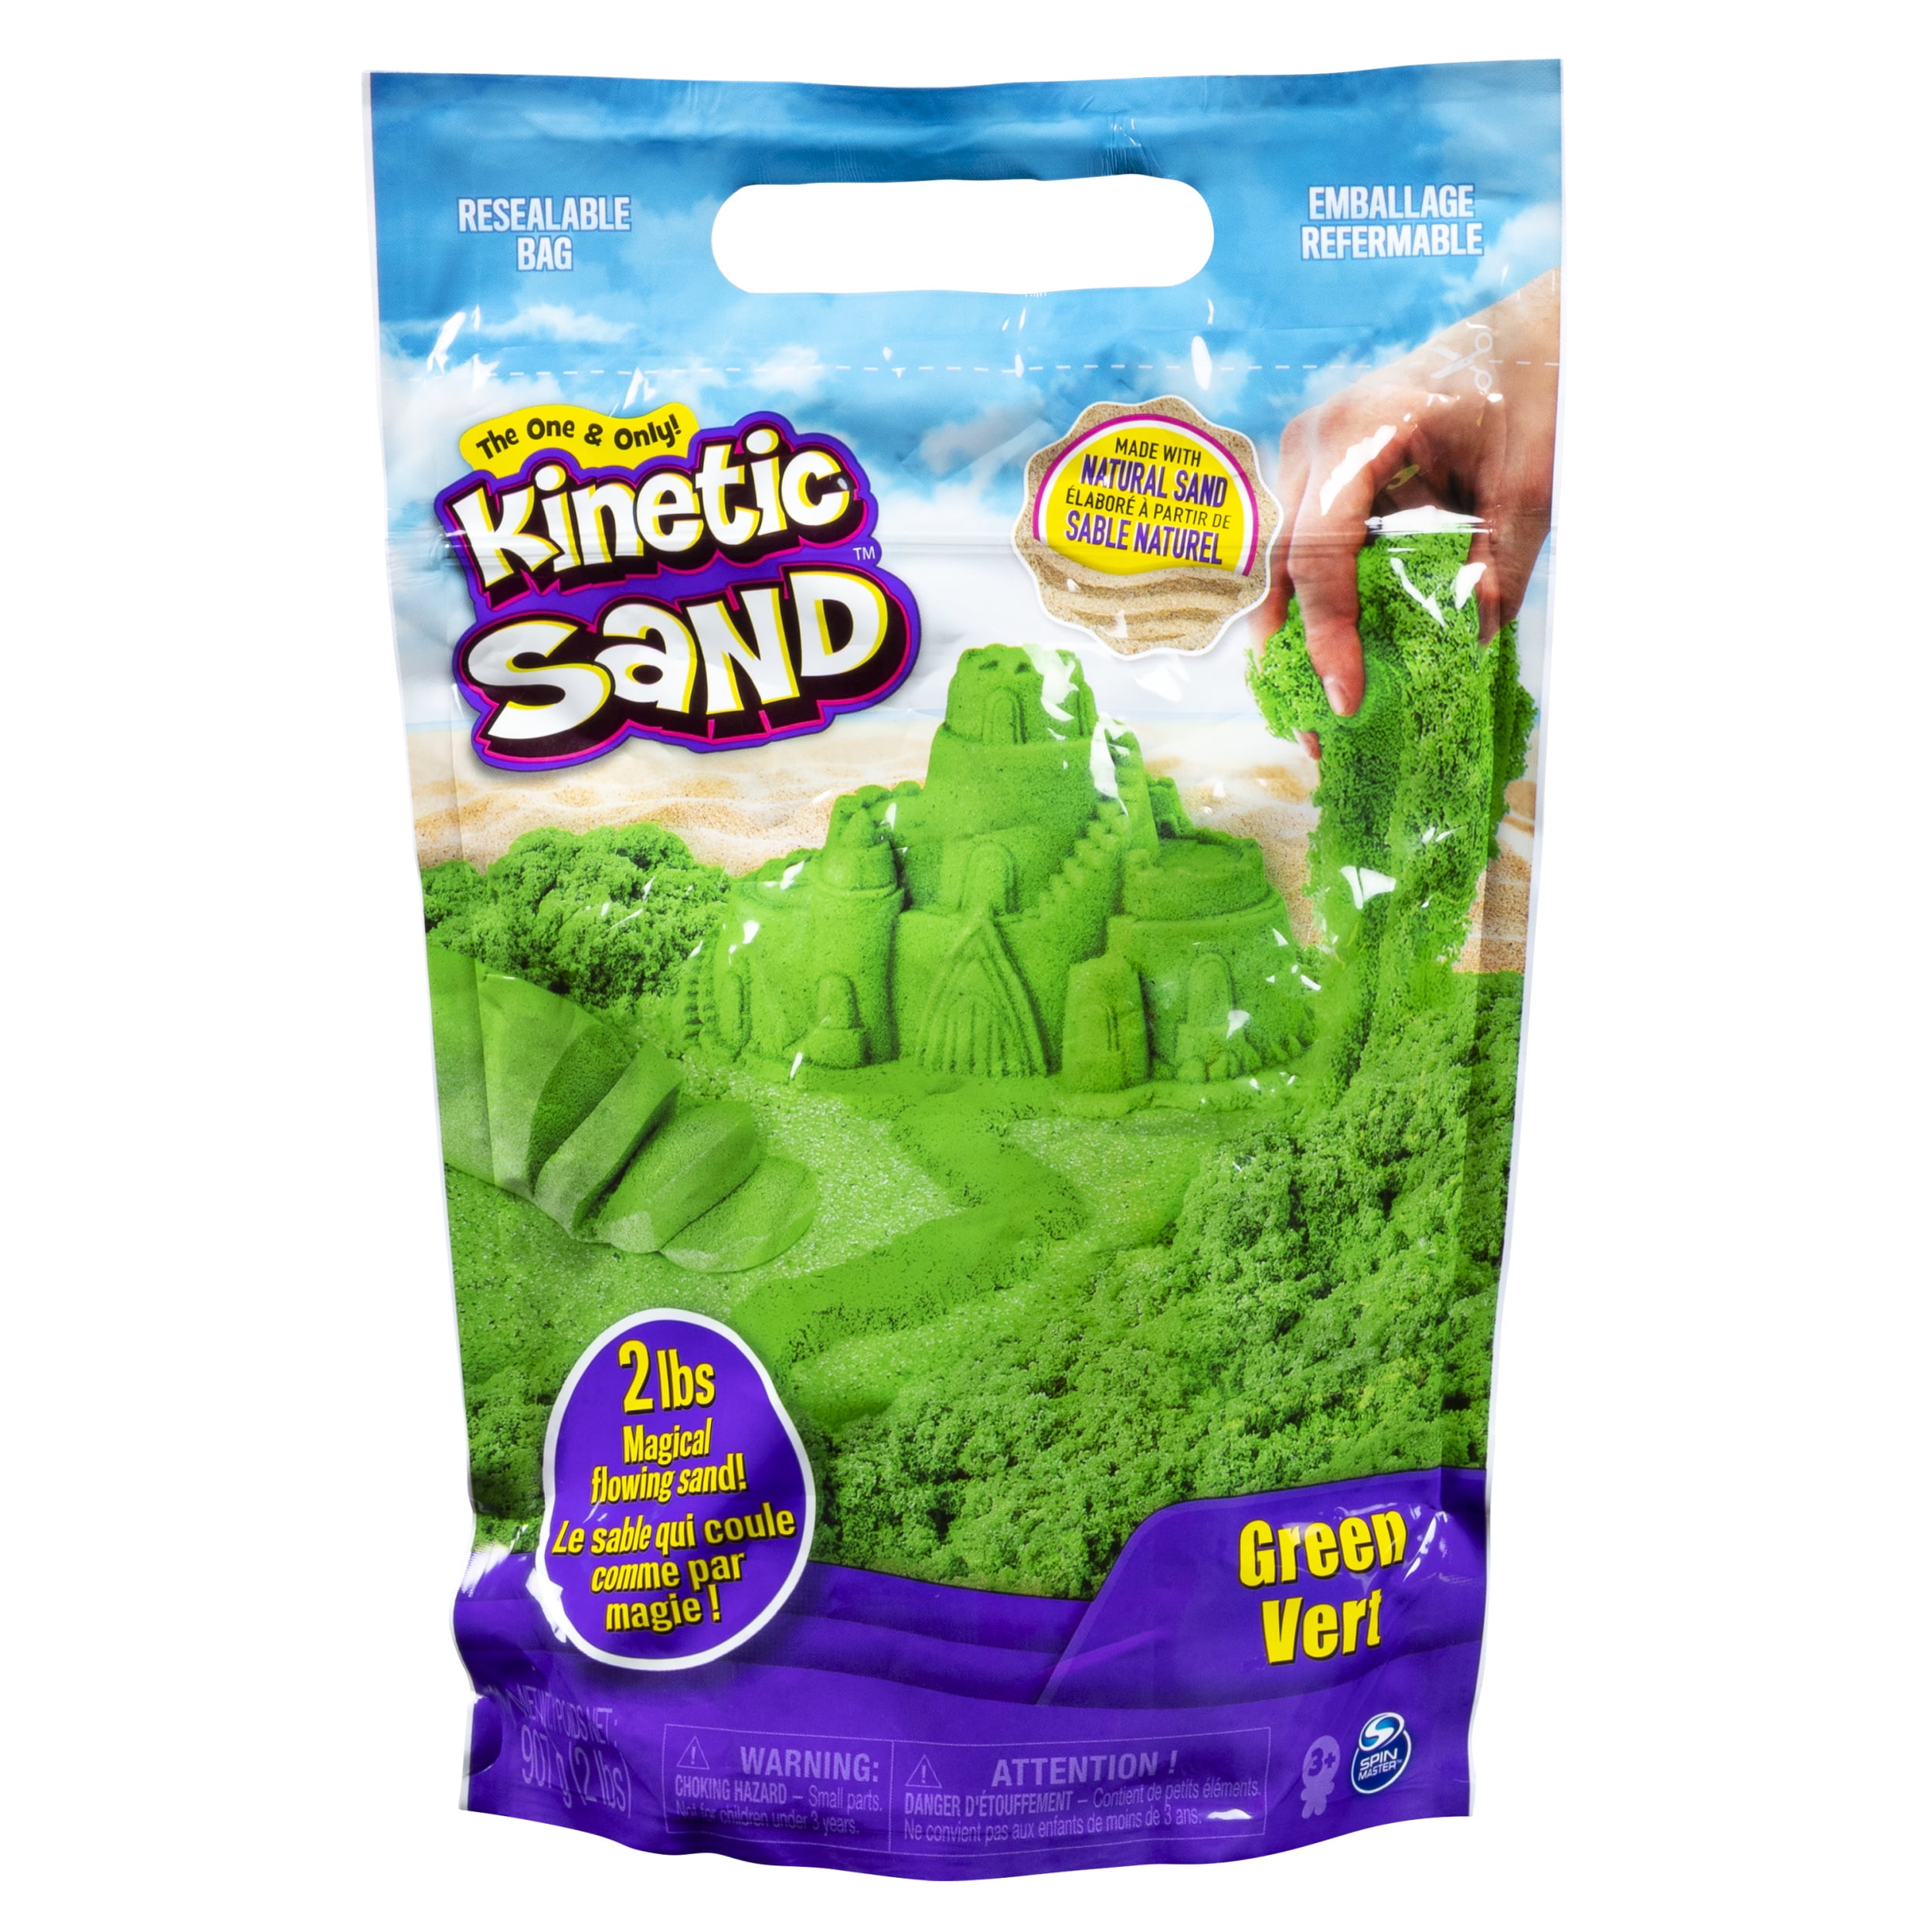 kinetic sand walmart near me